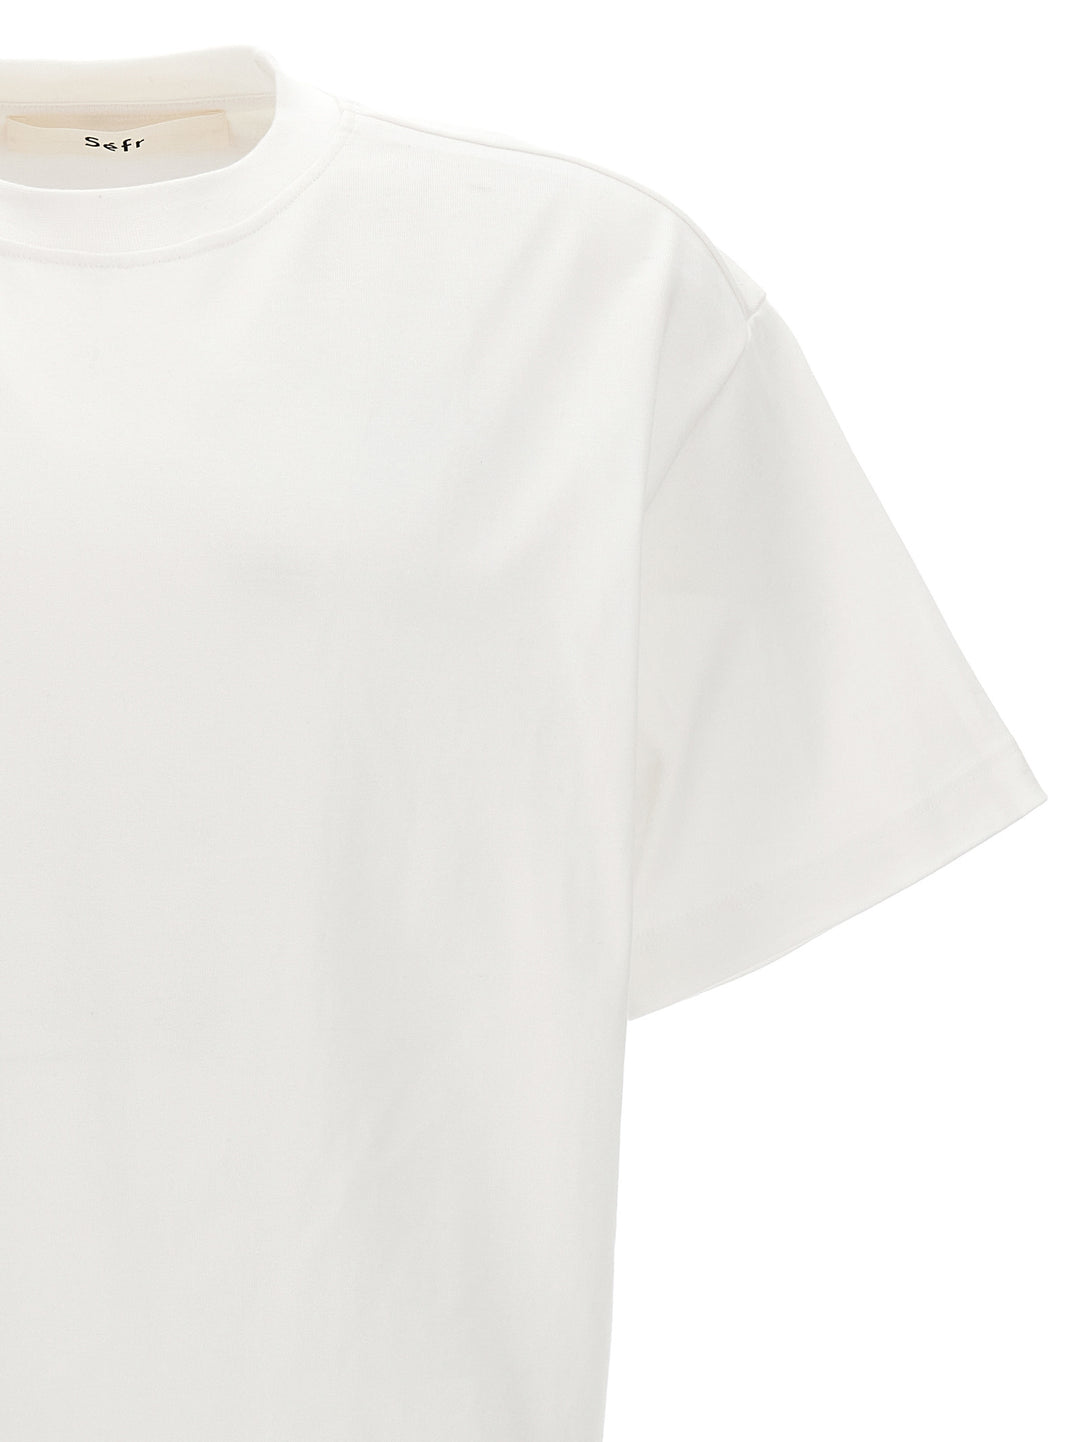 Atelier T Shirt Bianco